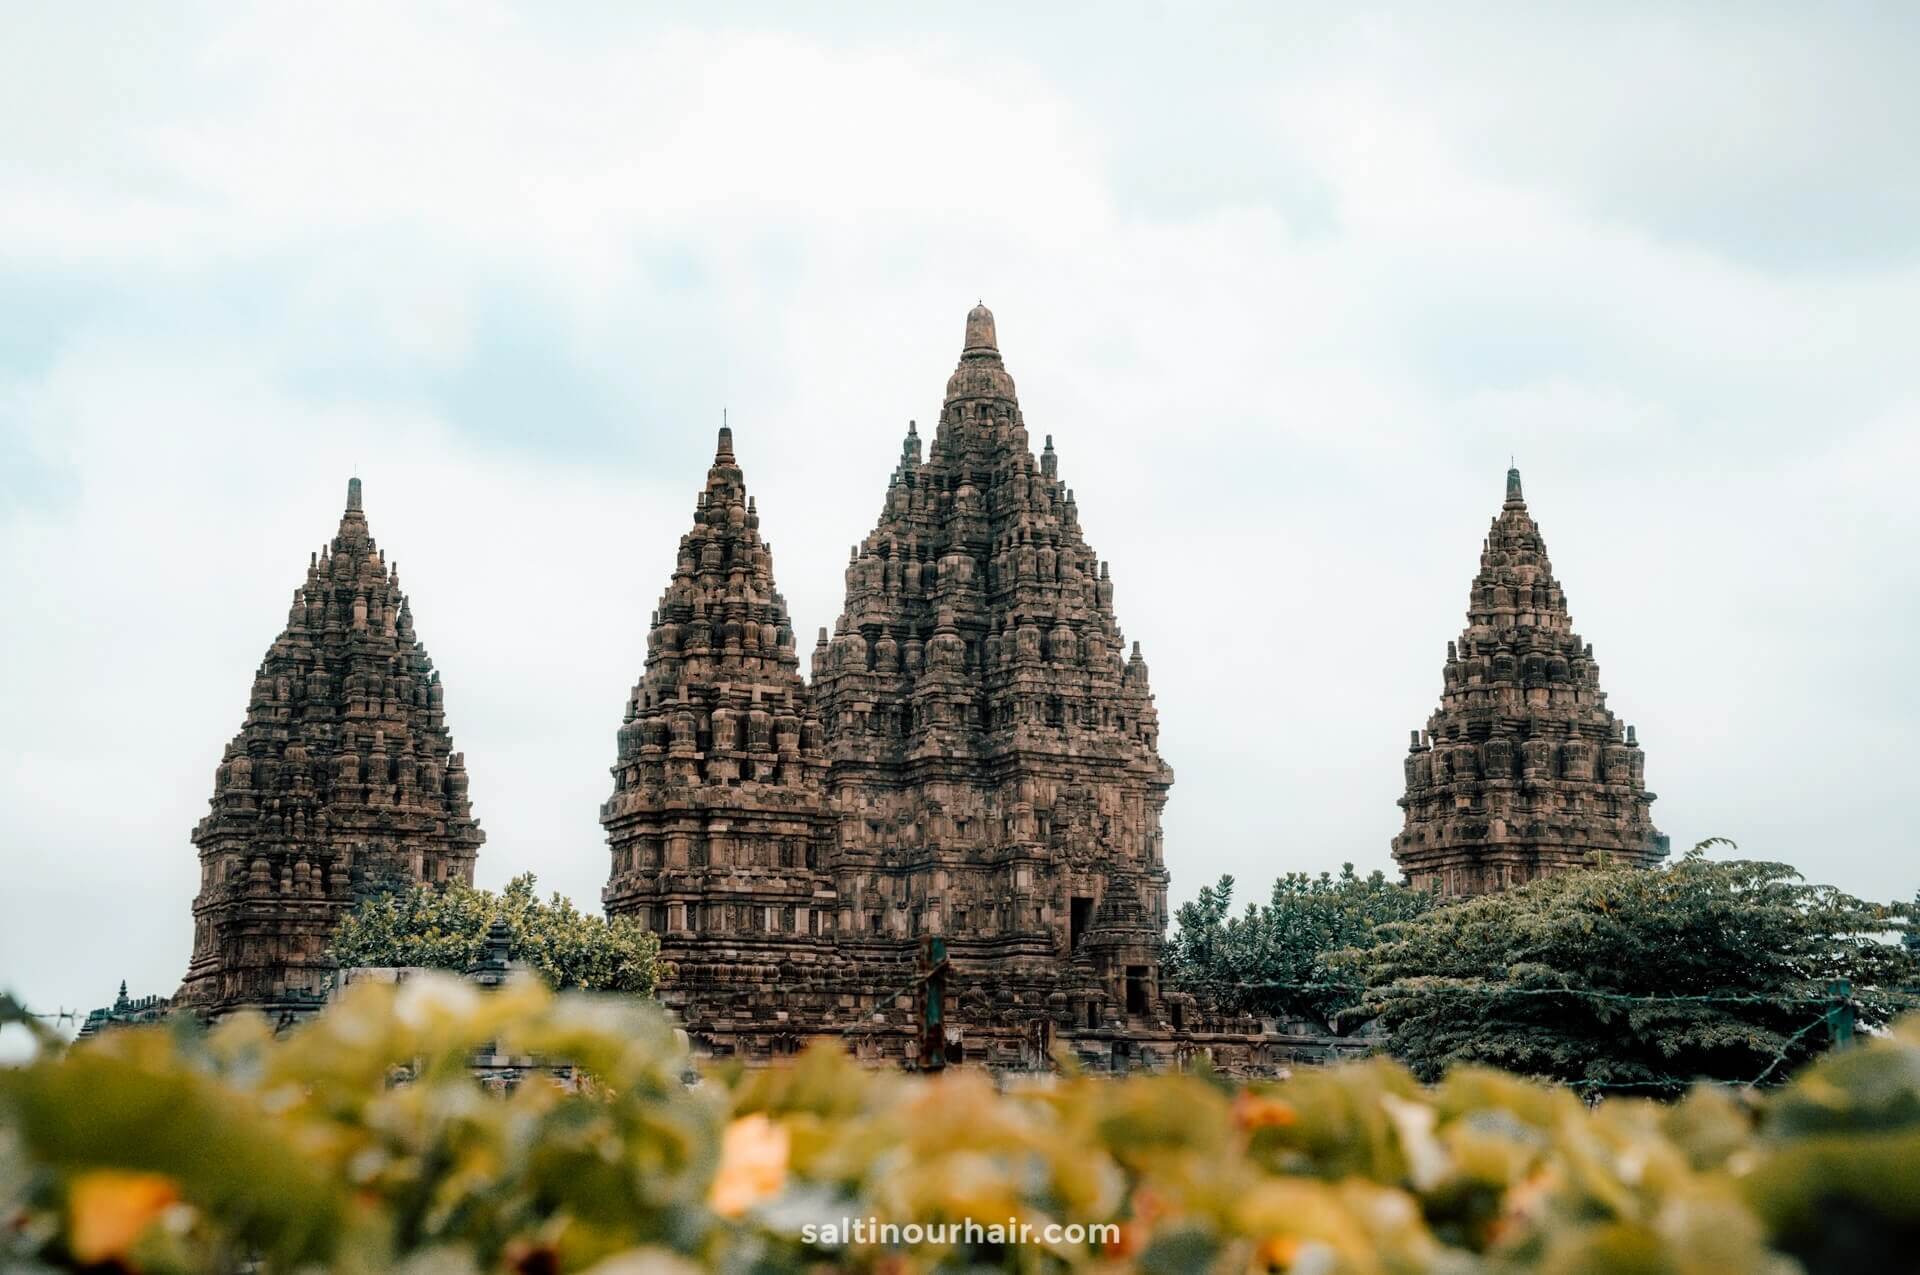 doen in Indonesië Yogyakarta Prambanan-tempel doen?